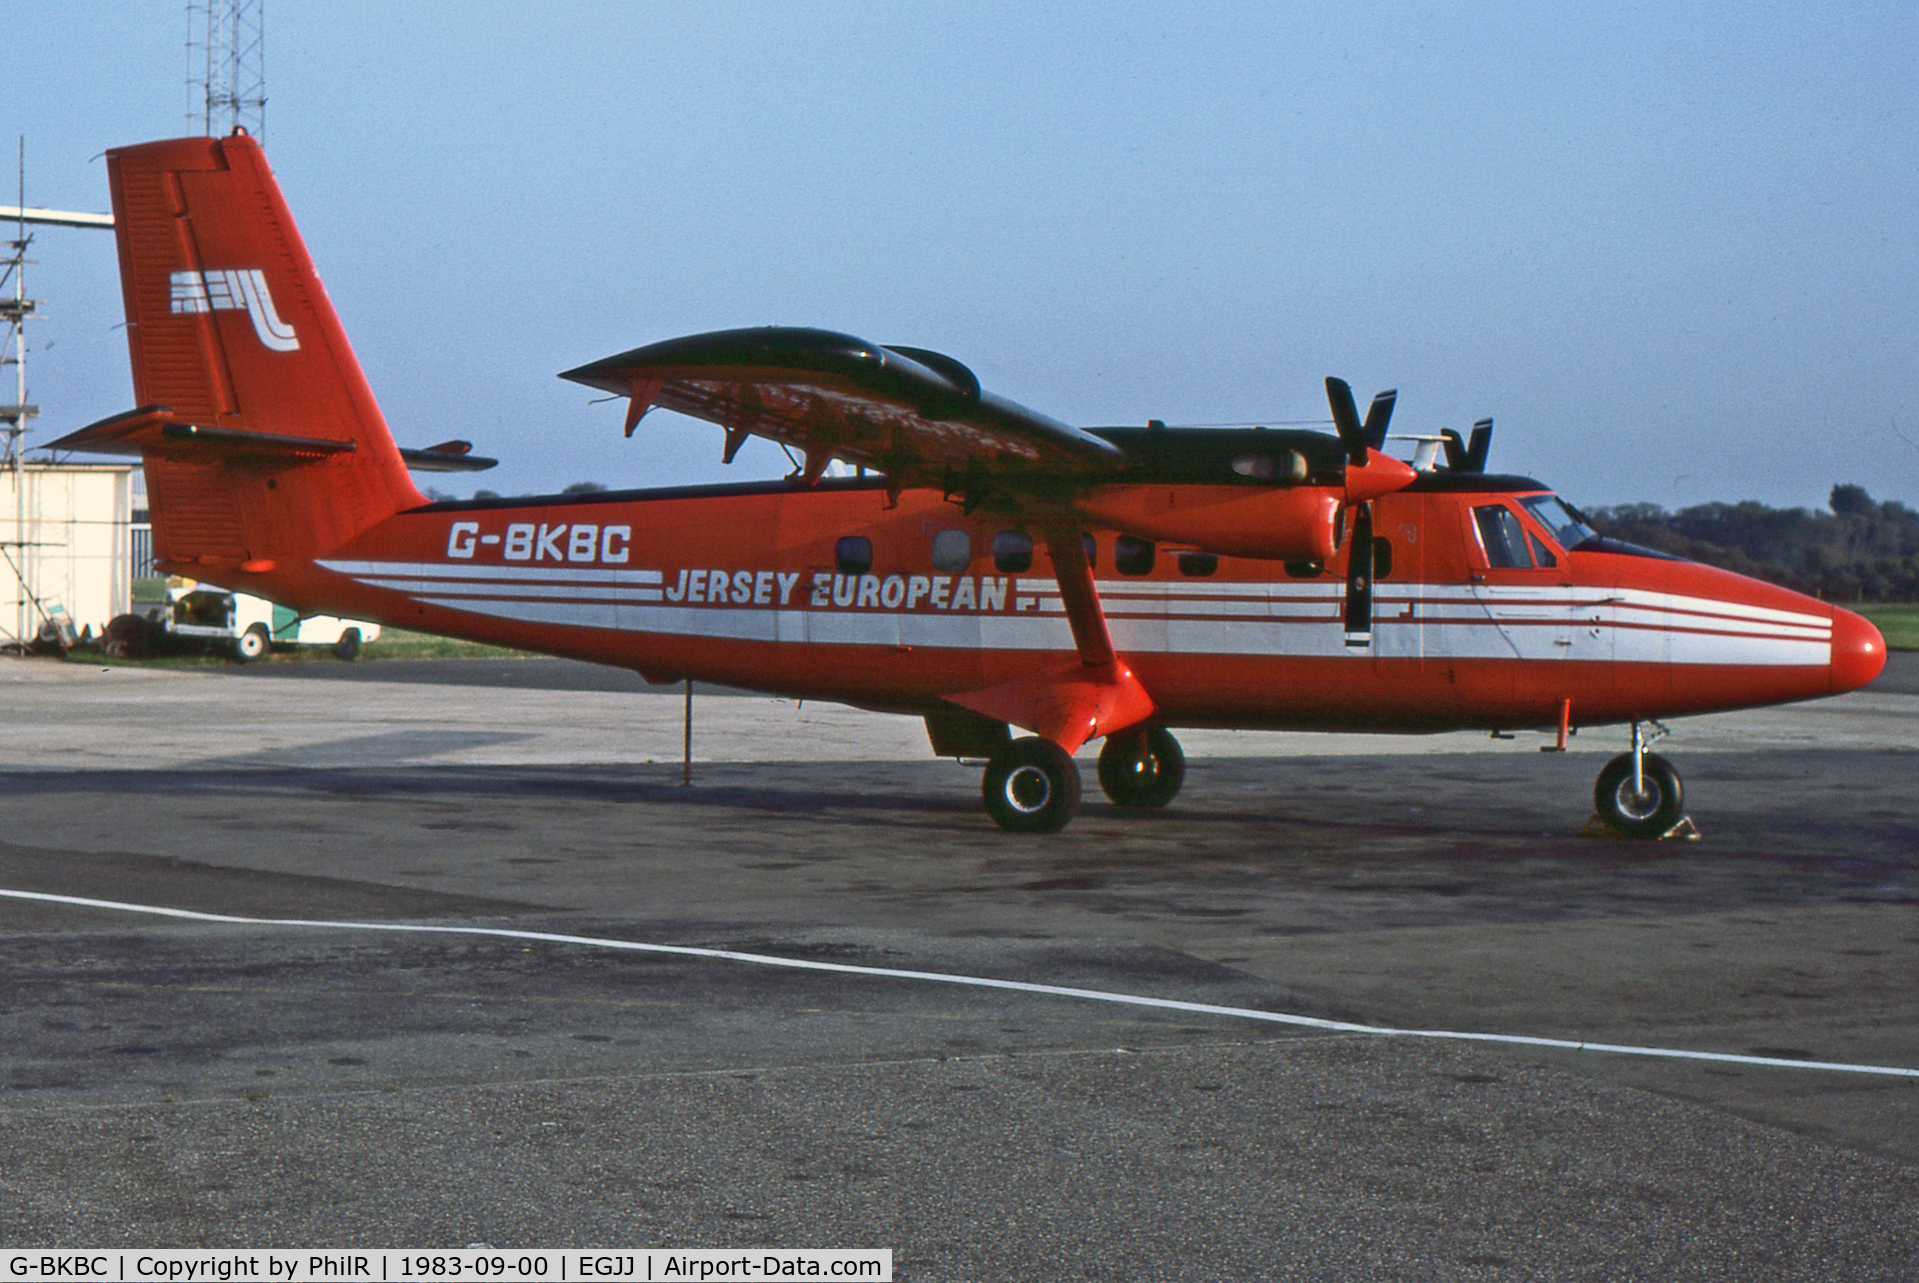 G-BKBC, 1972 De Havilland Canada DHC-6-310 Twin Otter C/N 347, JEA 1972 DHC-8-310 G-BKBC